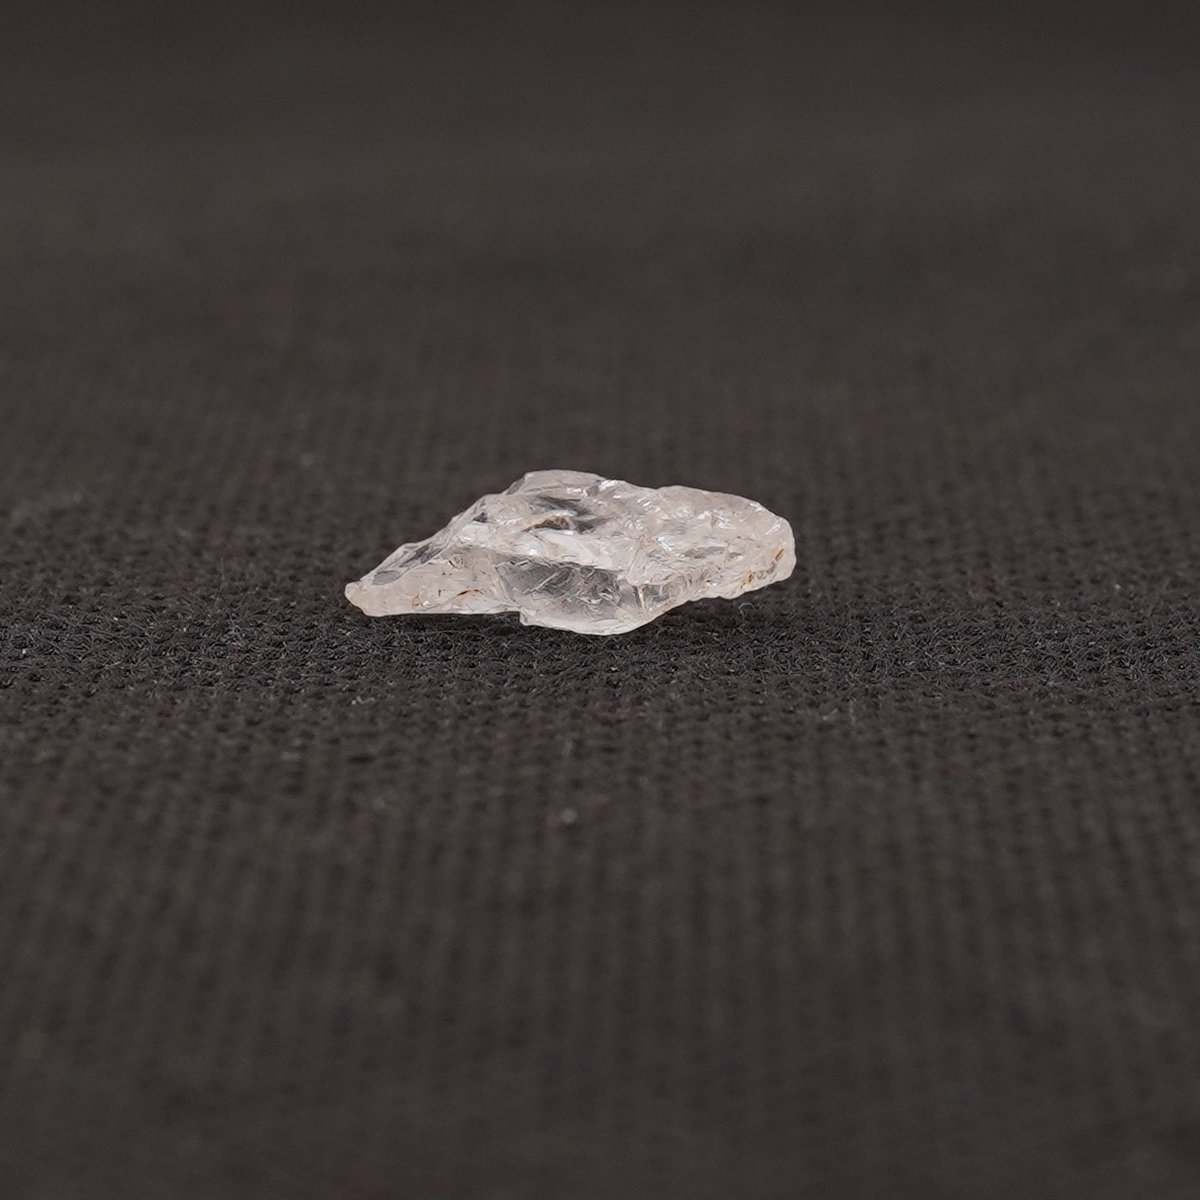 Fenacit nigerian cristal natural unicat f200